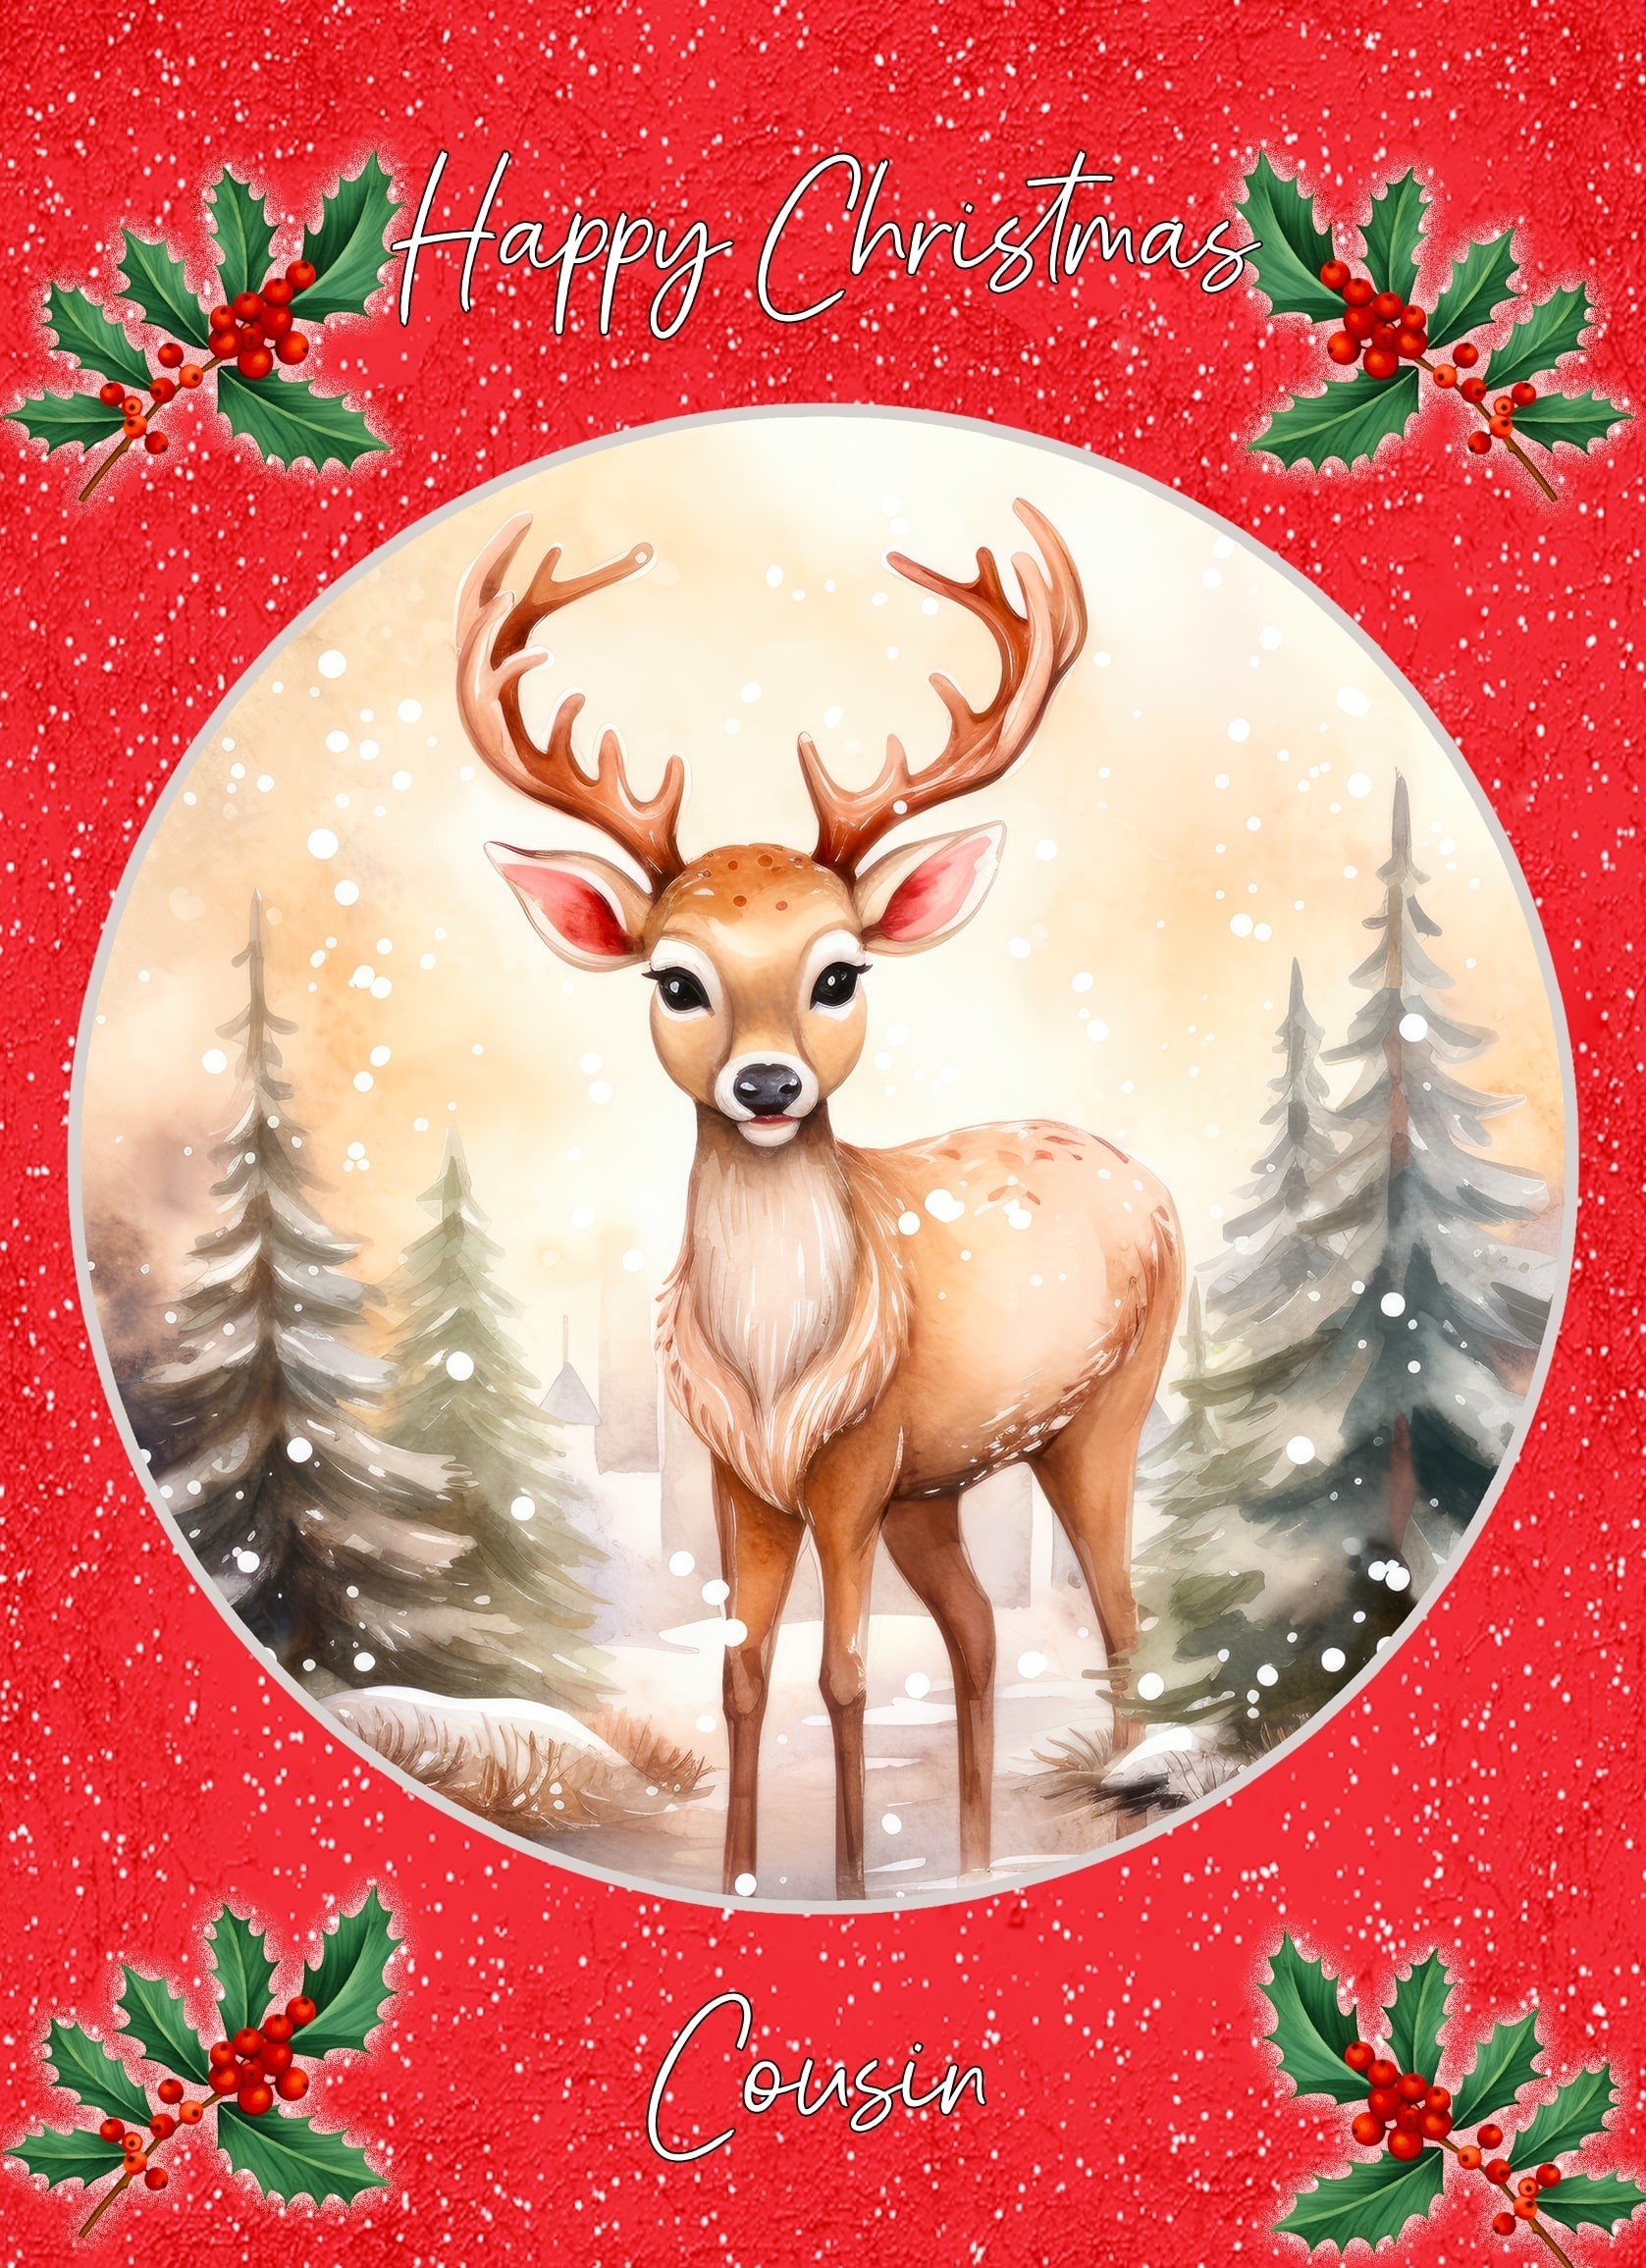 Christmas Card For Cousin (Globe, Deer)